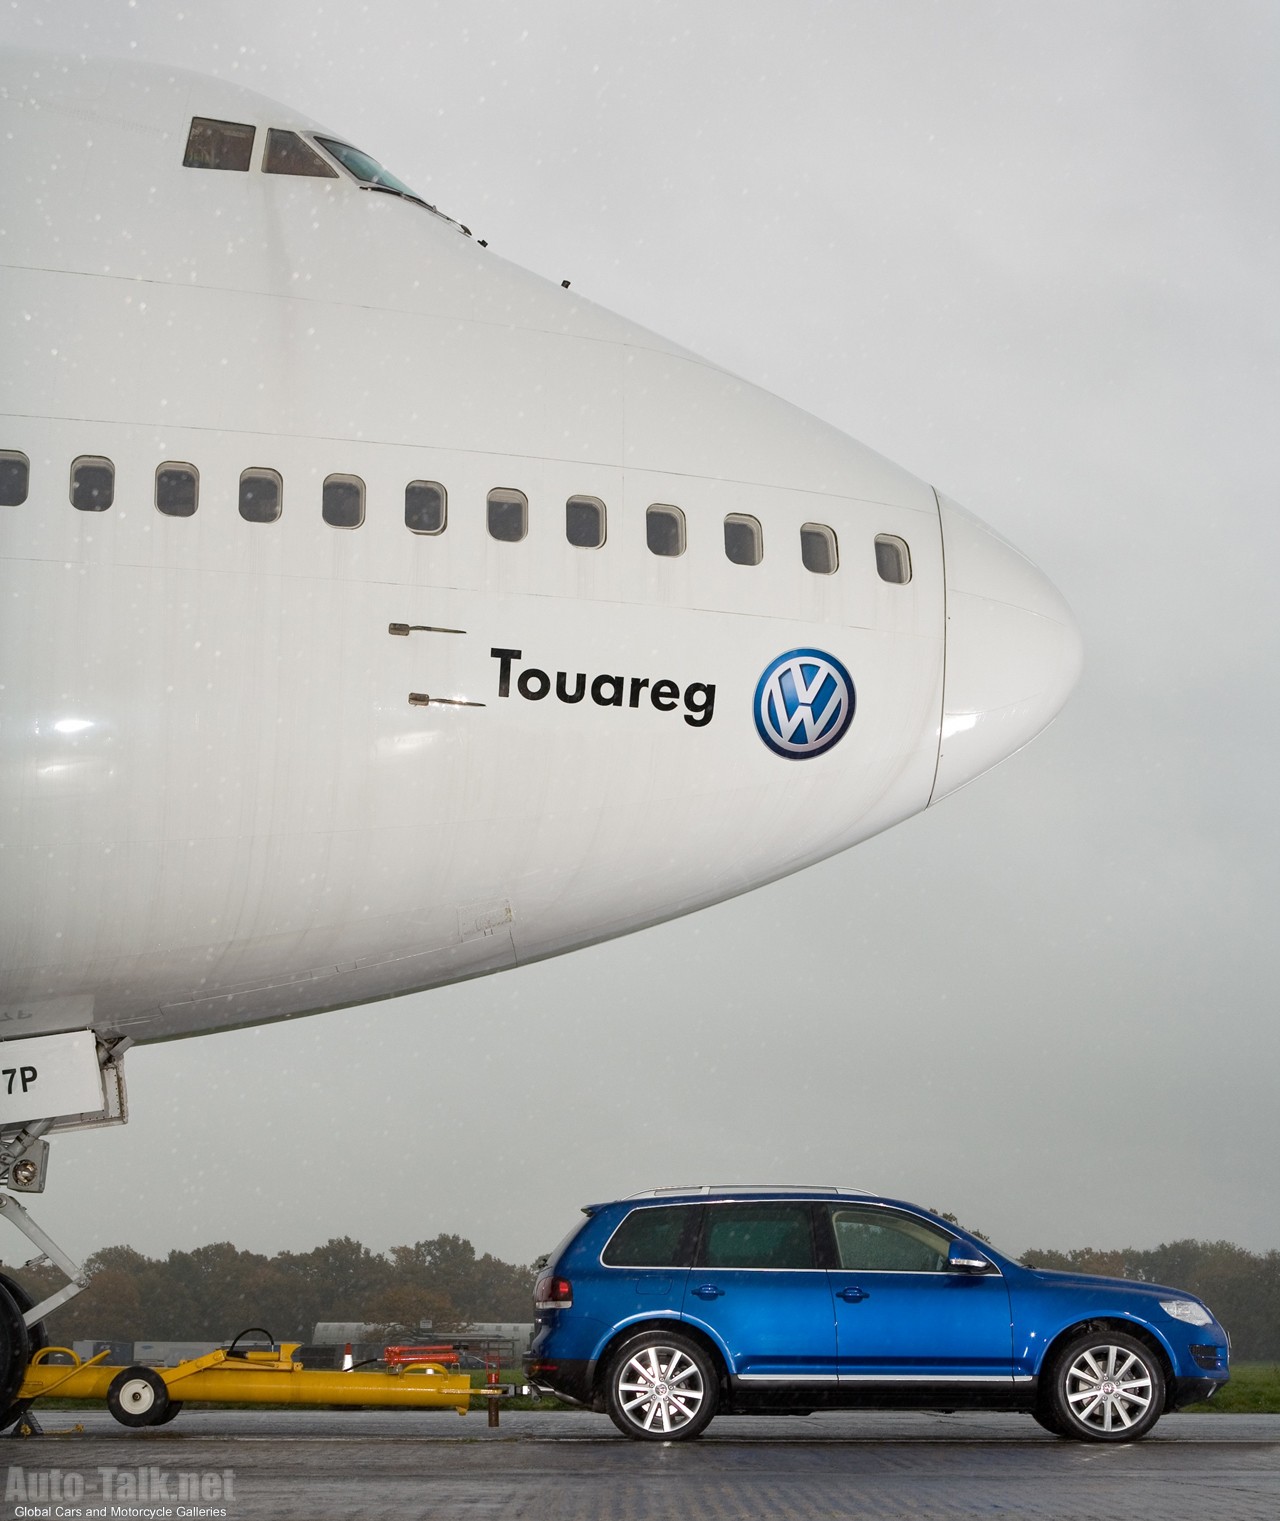 Volkswagen Touareg V10 TDI tows a Boeing 747